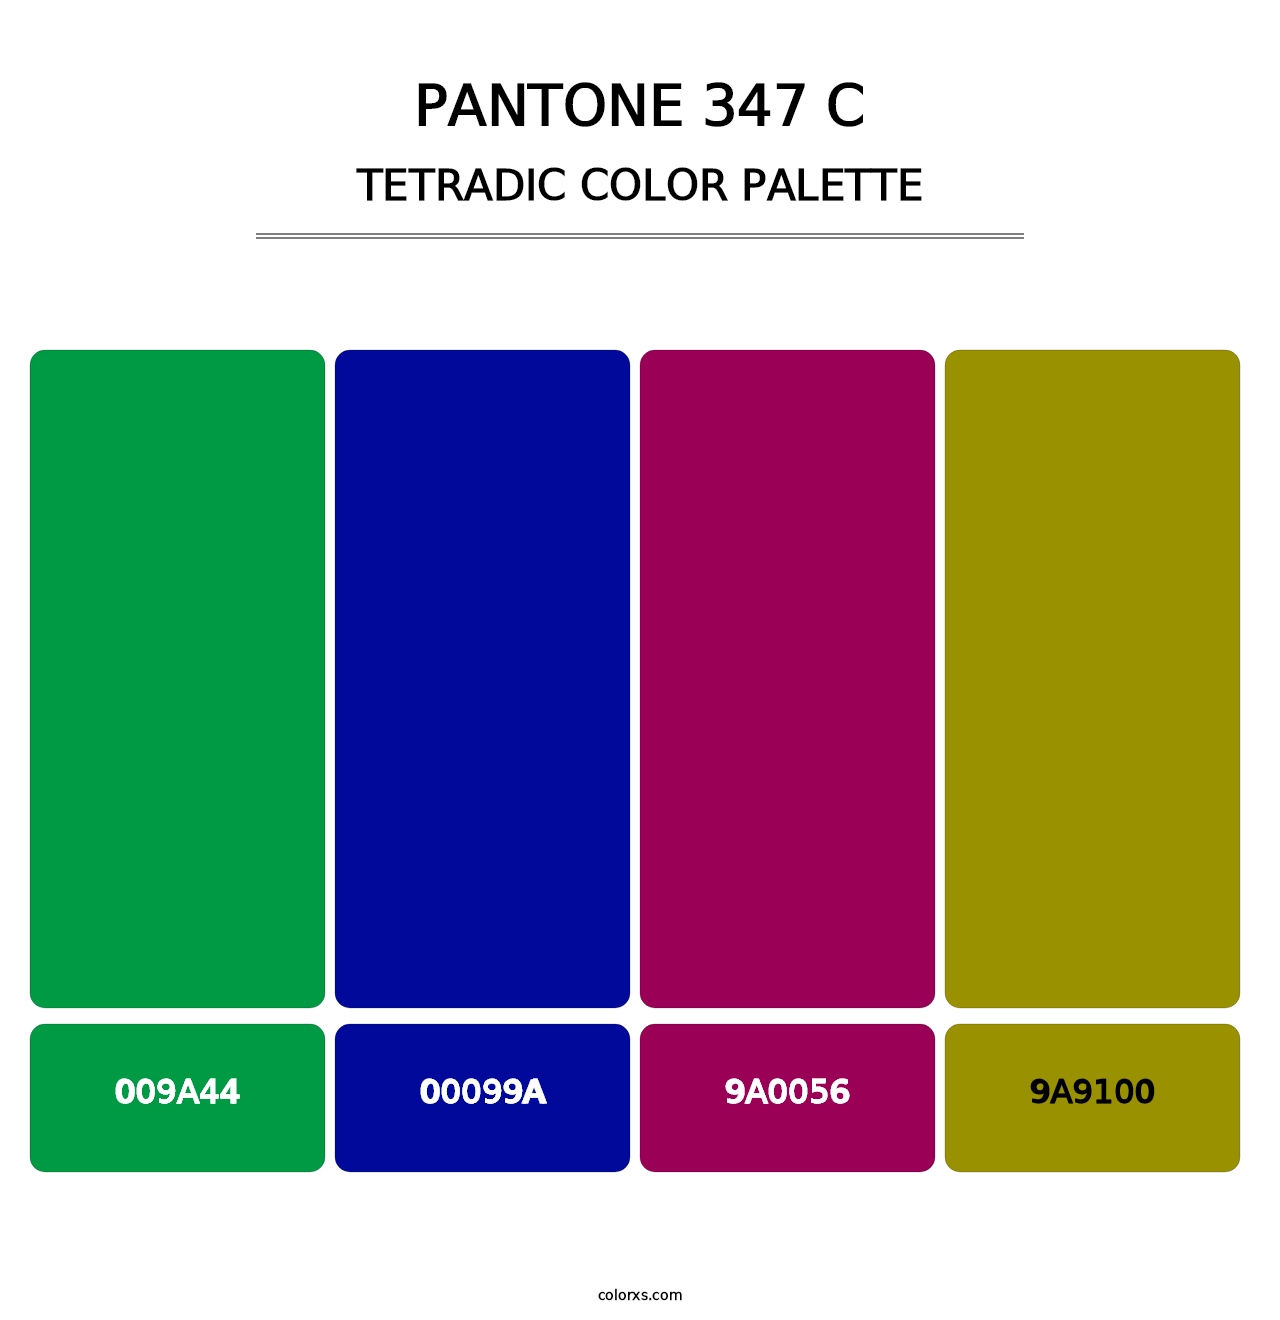 PANTONE 347 C - Tetradic Color Palette